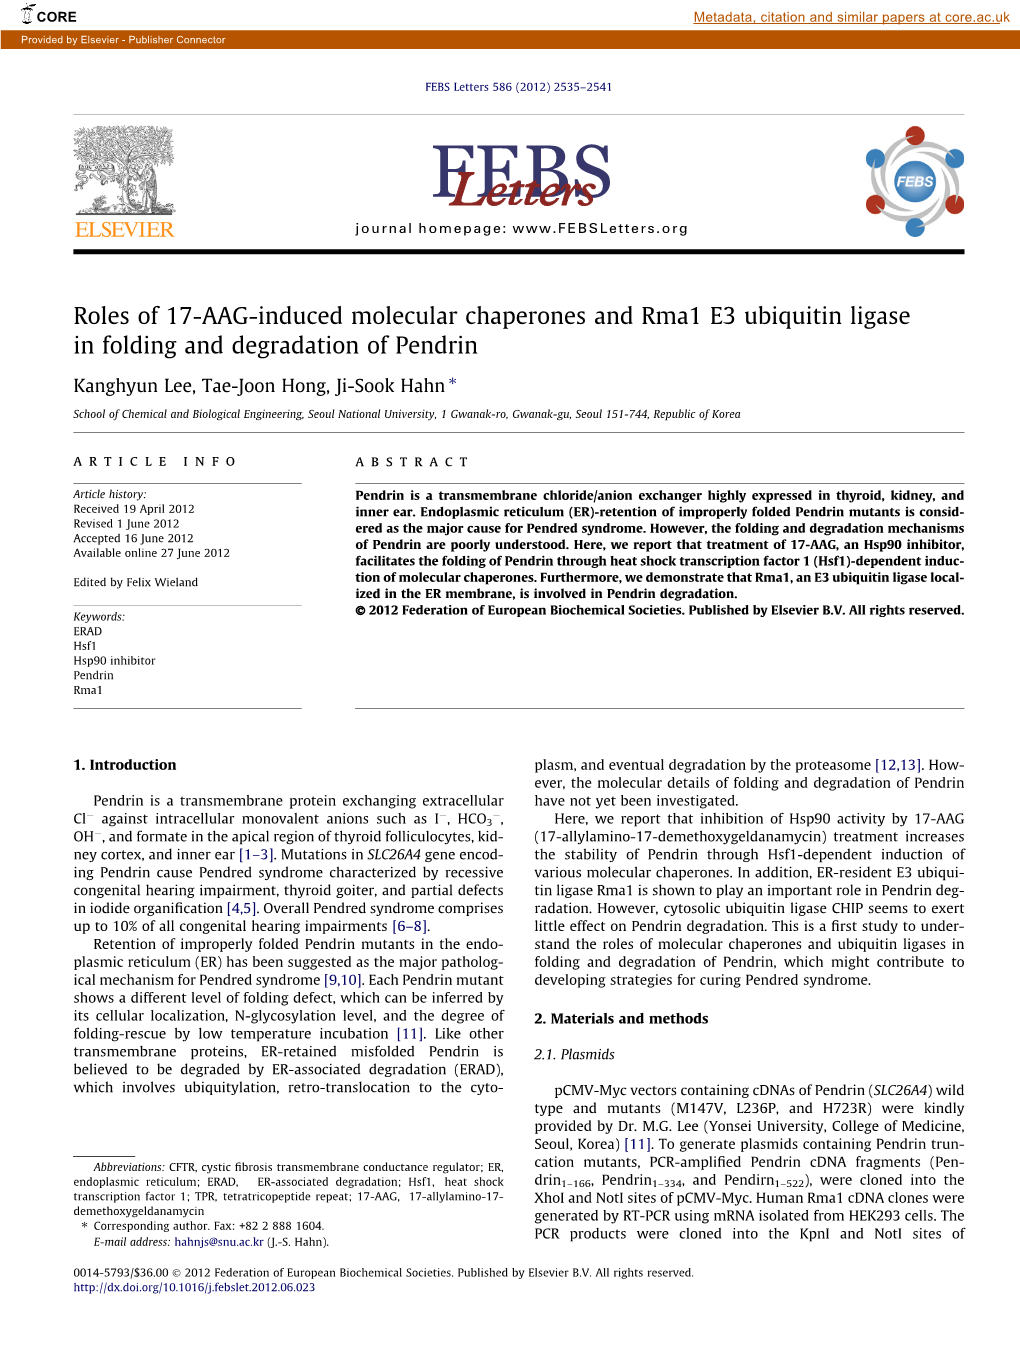 Roles of 17-AAG-Induced Molecular Chaperones and Rma1 E3 Ubiquitin Ligase in Folding and Degradation of Pendrin ⇑ Kanghyun Lee, Tae-Joon Hong, Ji-Sook Hahn